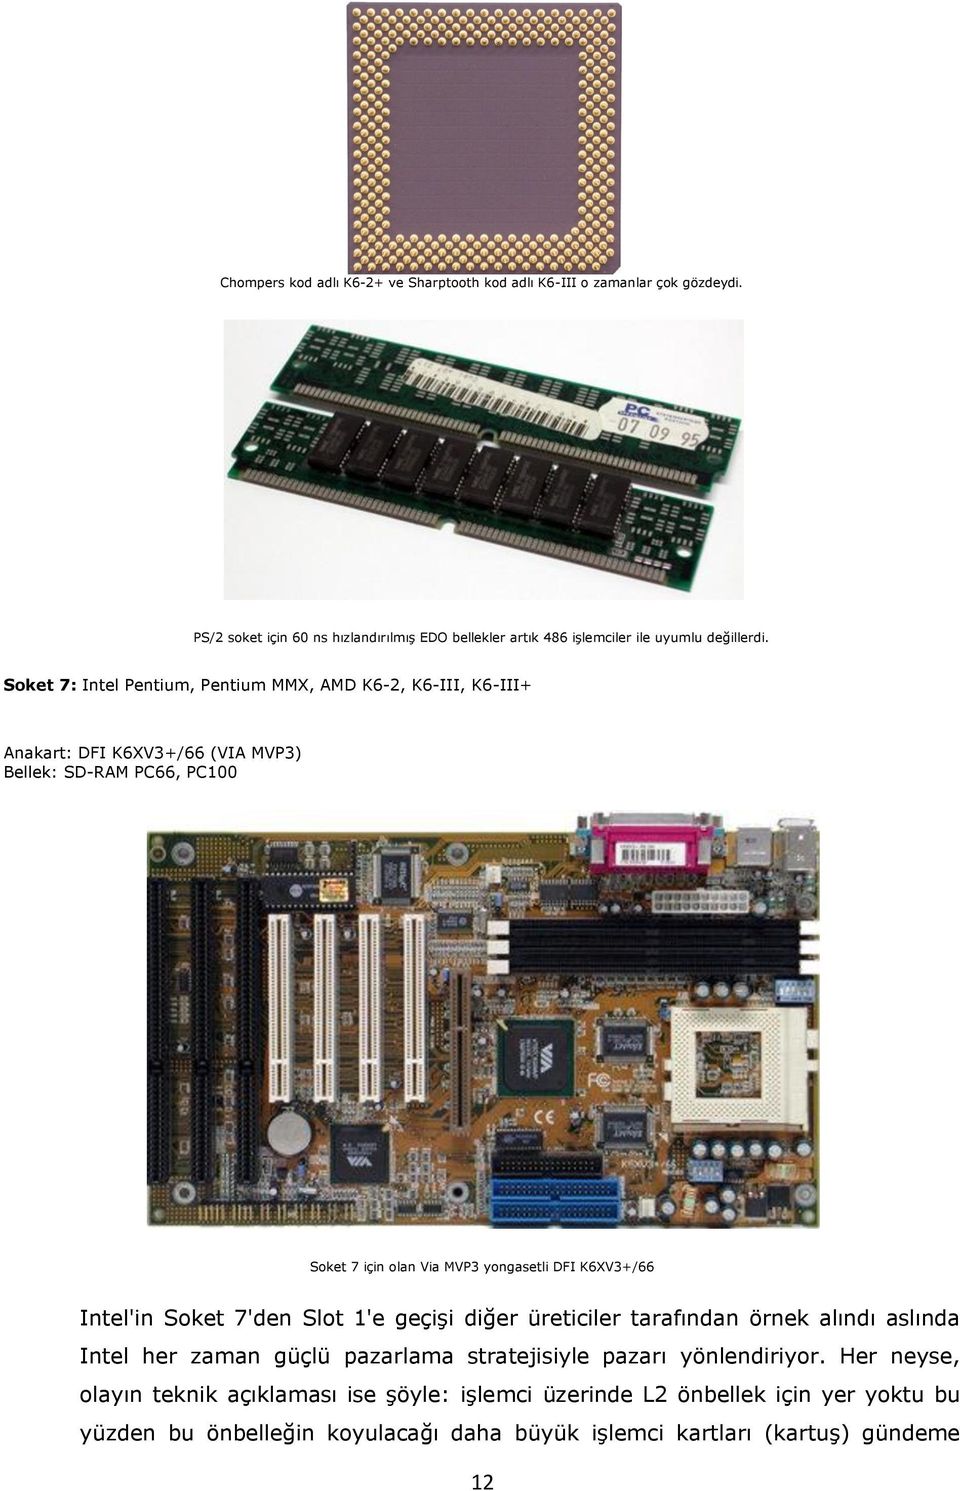 Soket 7: Intel Pentium, Pentium MMX, AMD K6-2, K6-III, K6-III+ Anakart: DFI K6XV3+/66 (VIA MVP3) Bellek: SD-RAM PC66, PC100 Soket 7 için olan Via MVP3 yongasetli DFI